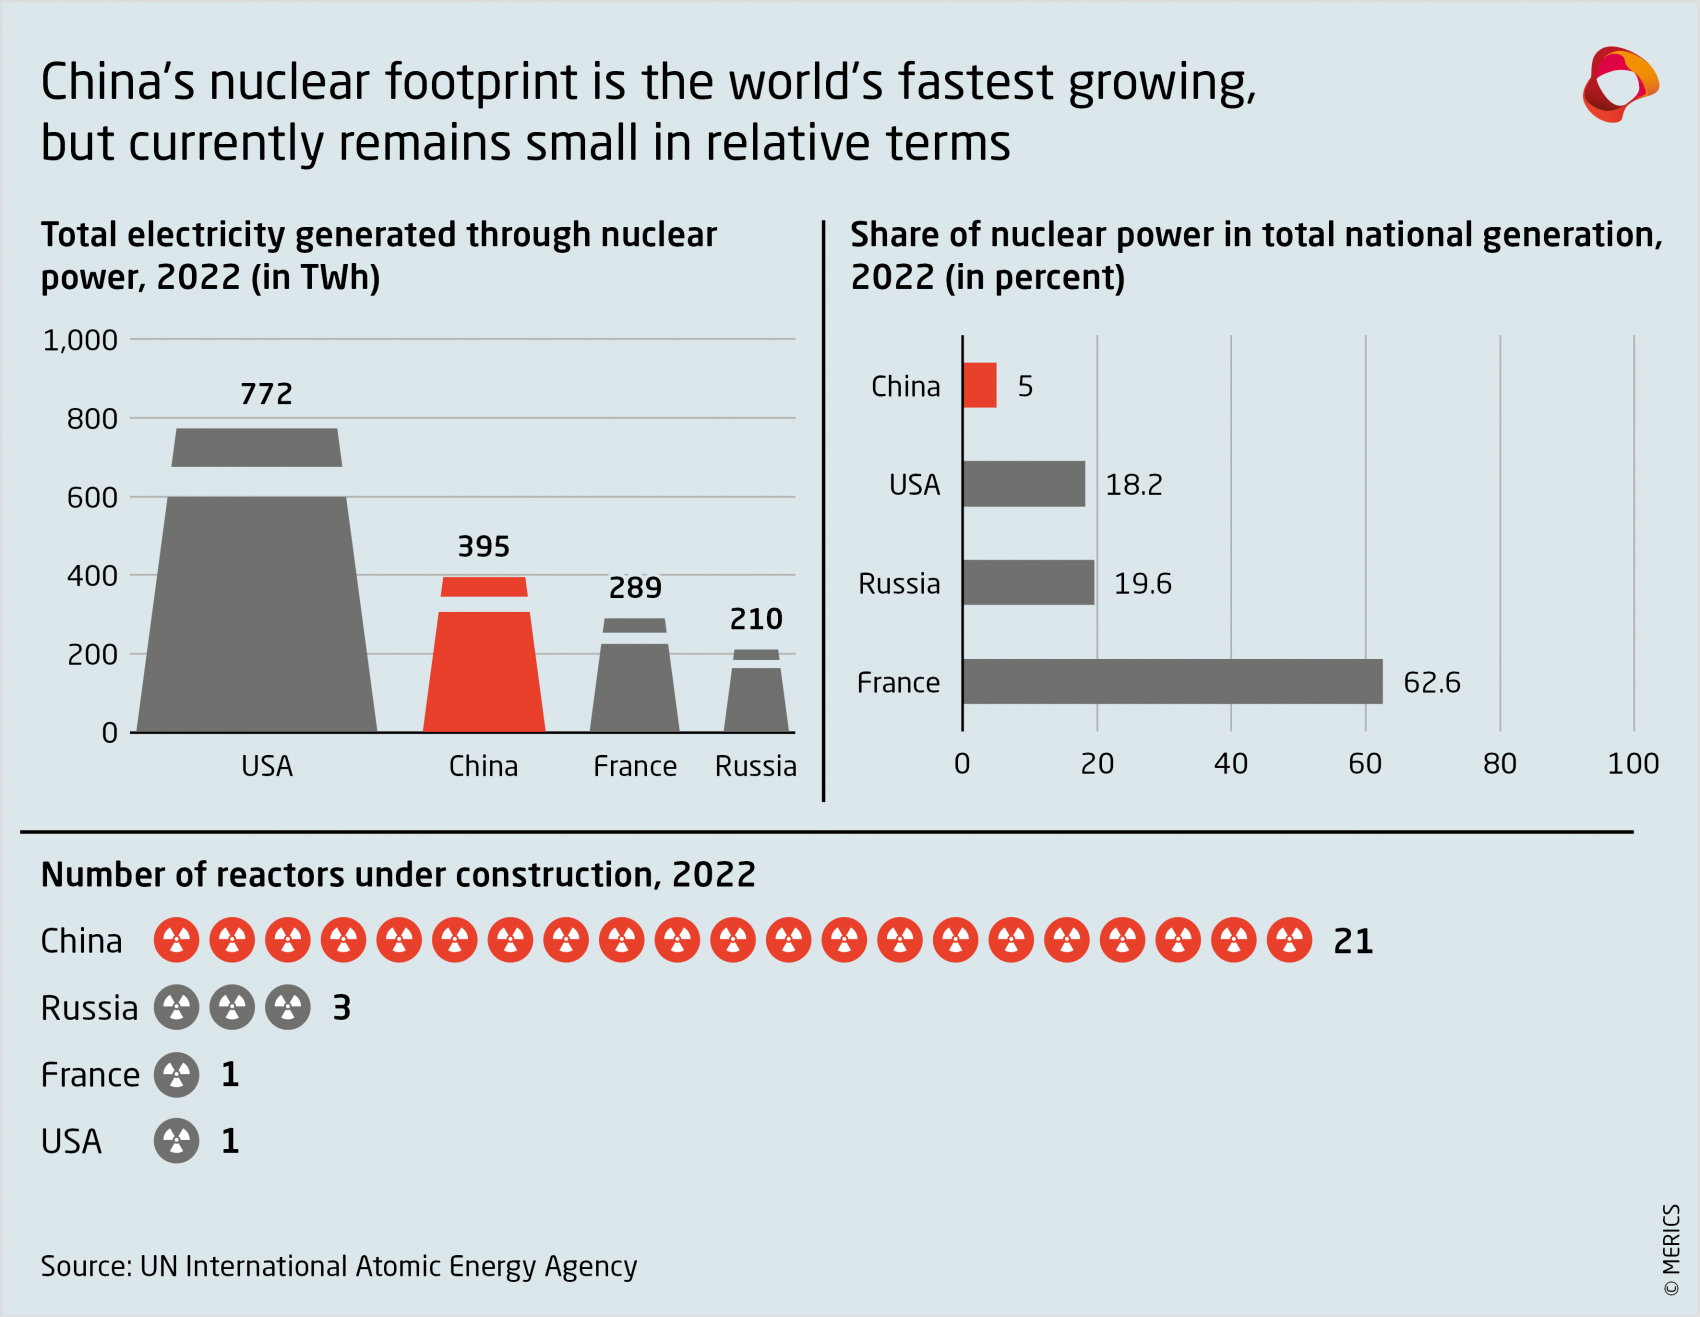 merics-china-nuclear-power-footprint-2022.png